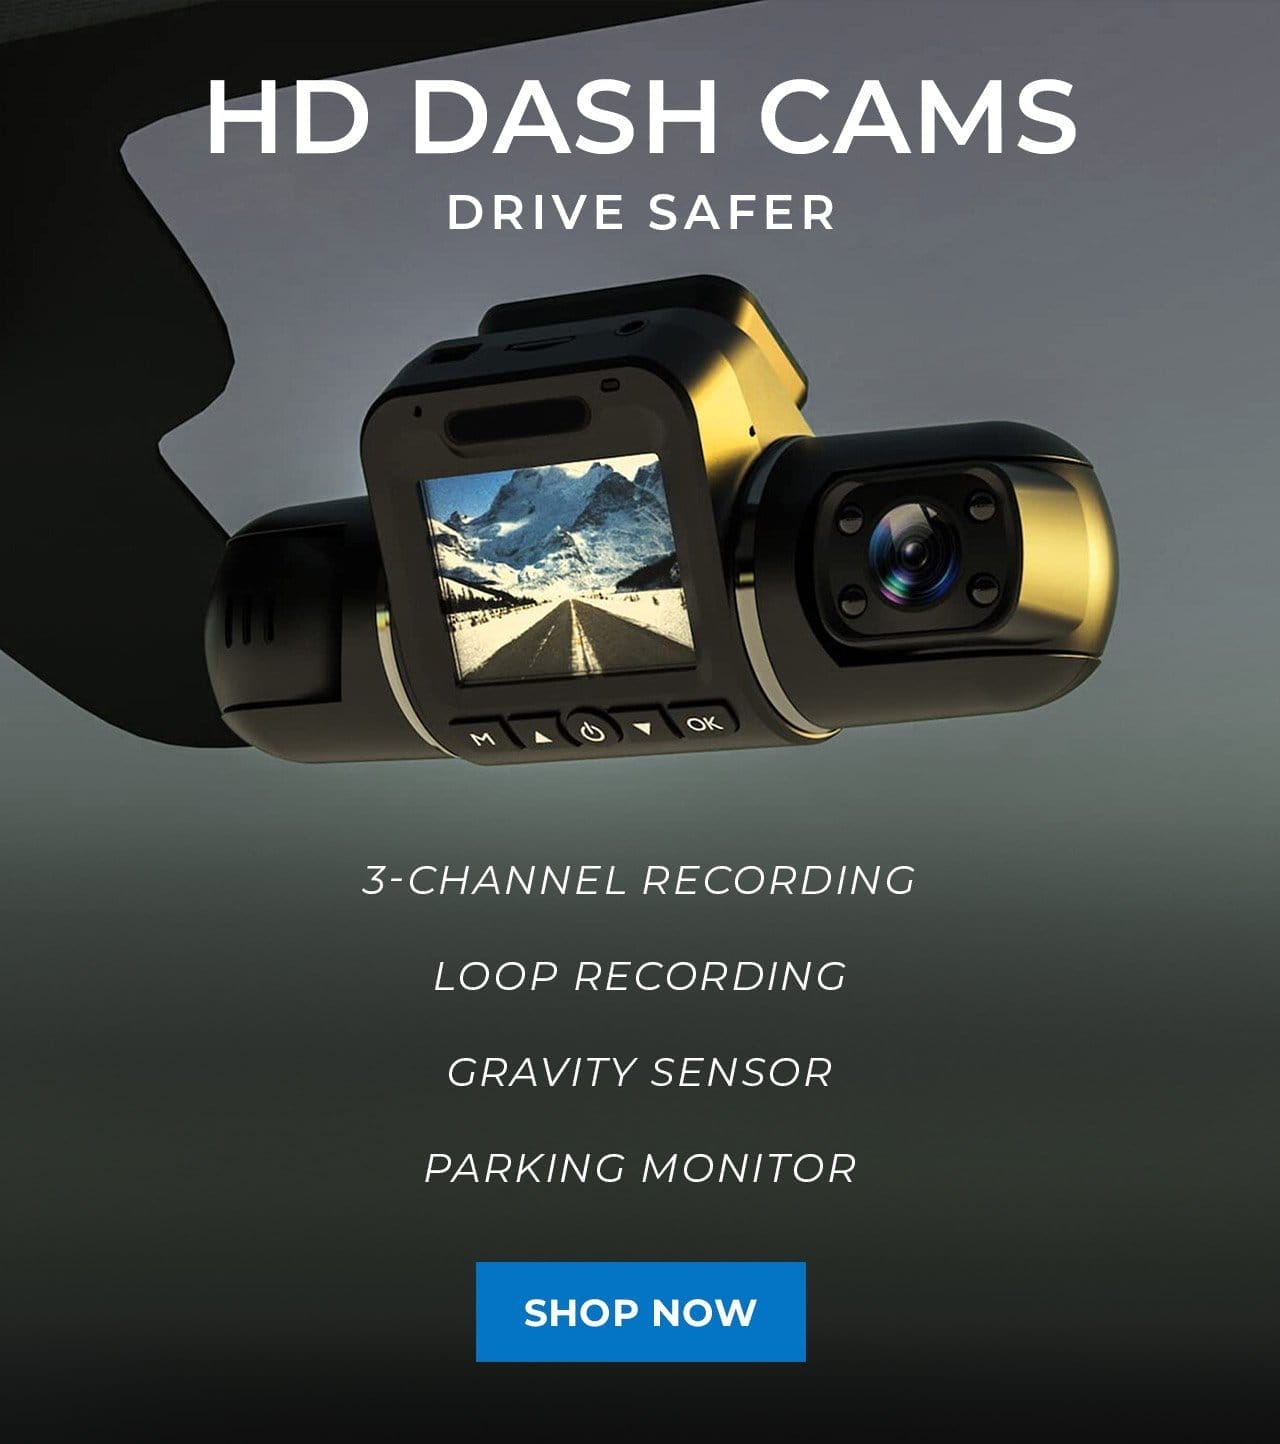 HD Dash Cams | SHOP NOW